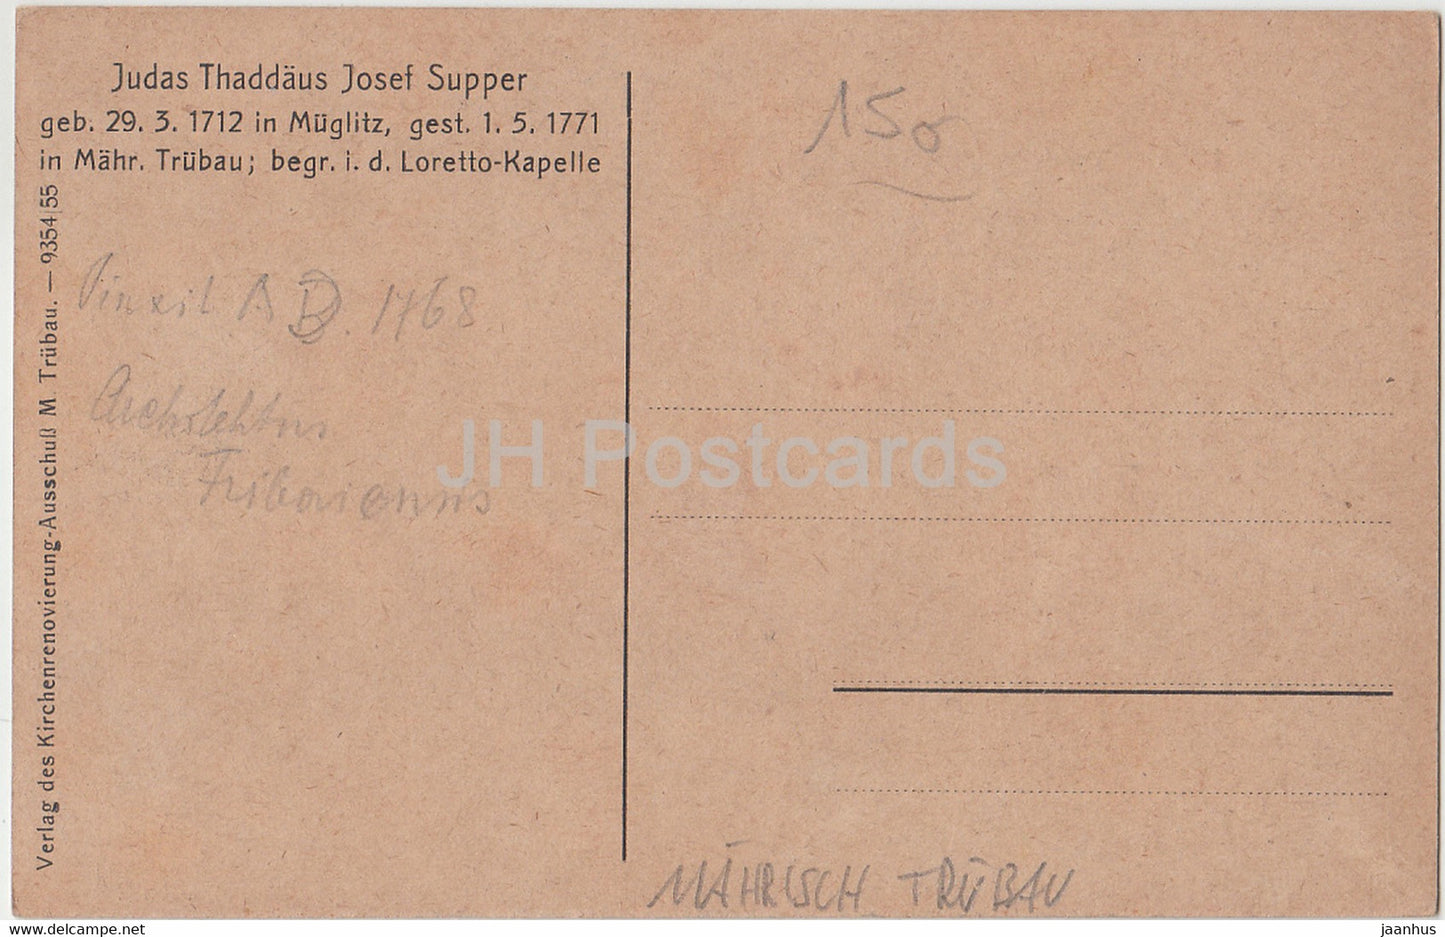 Judas Thaddaus - Josef Supper - Mahr Trubau - Moravska Trebova - Loretto Kapelle - old postcard - Czech Republic - used